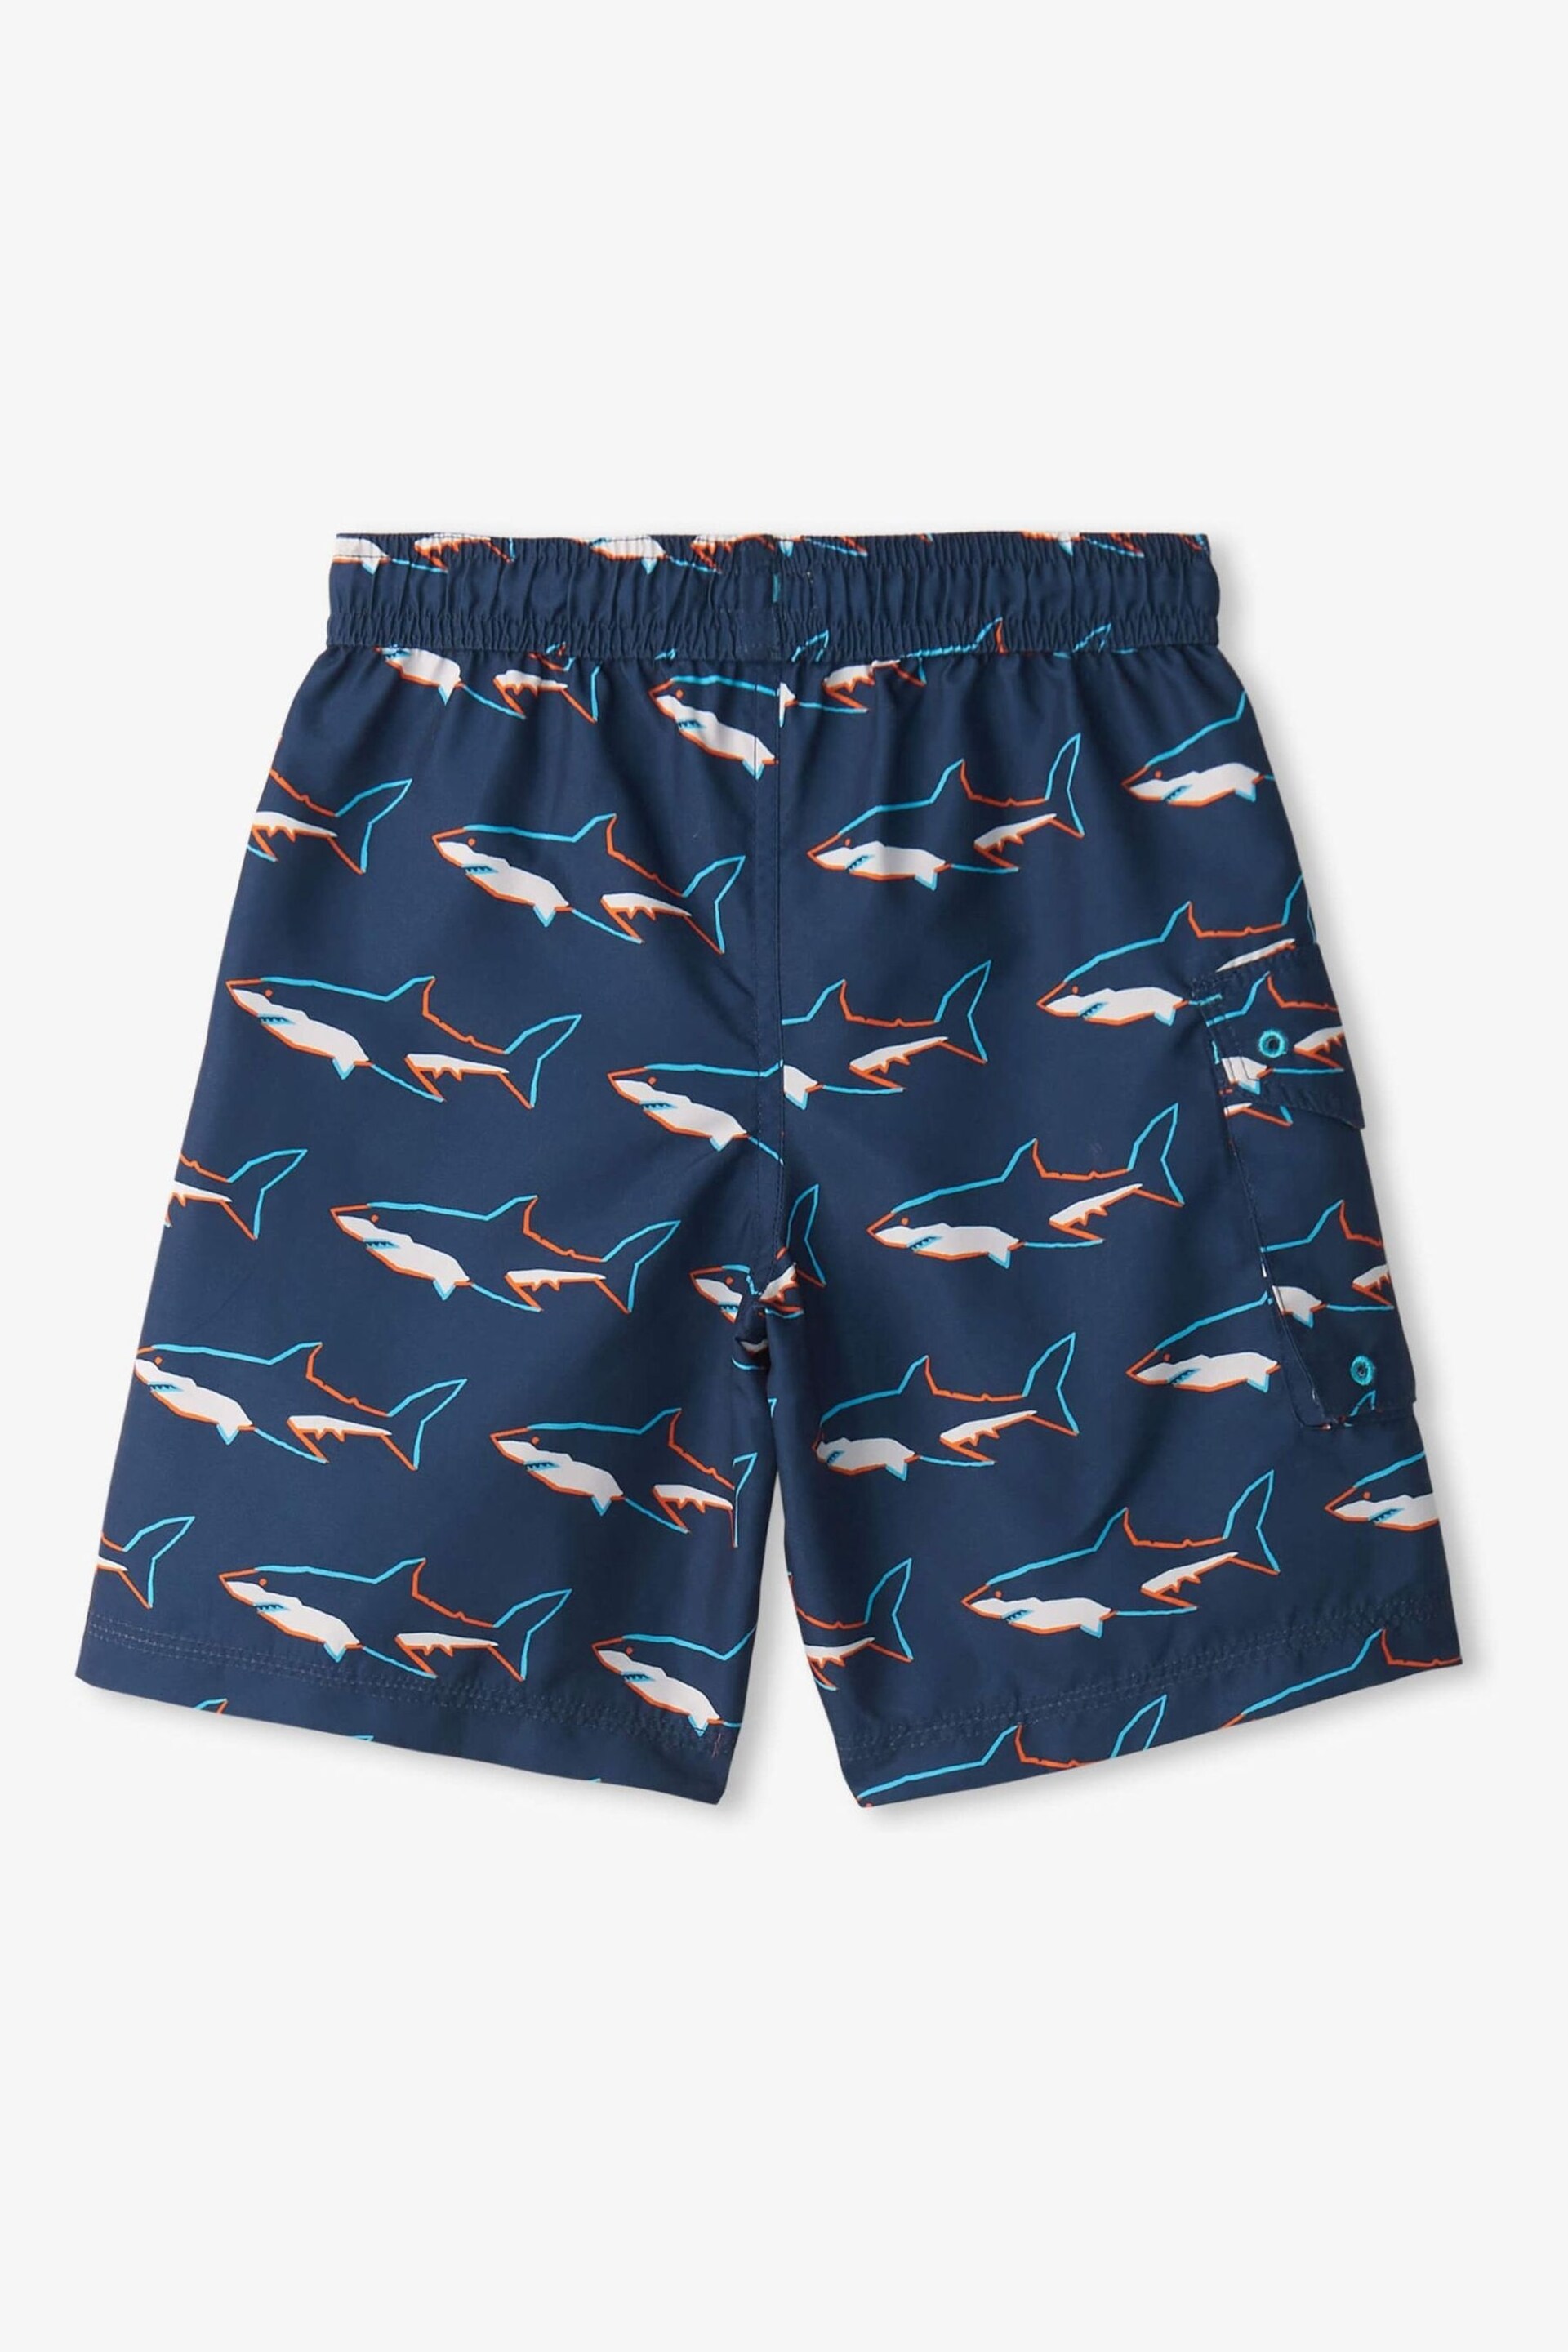 Hatley Tropical Sharks Swim Shorts - Image 2 of 6